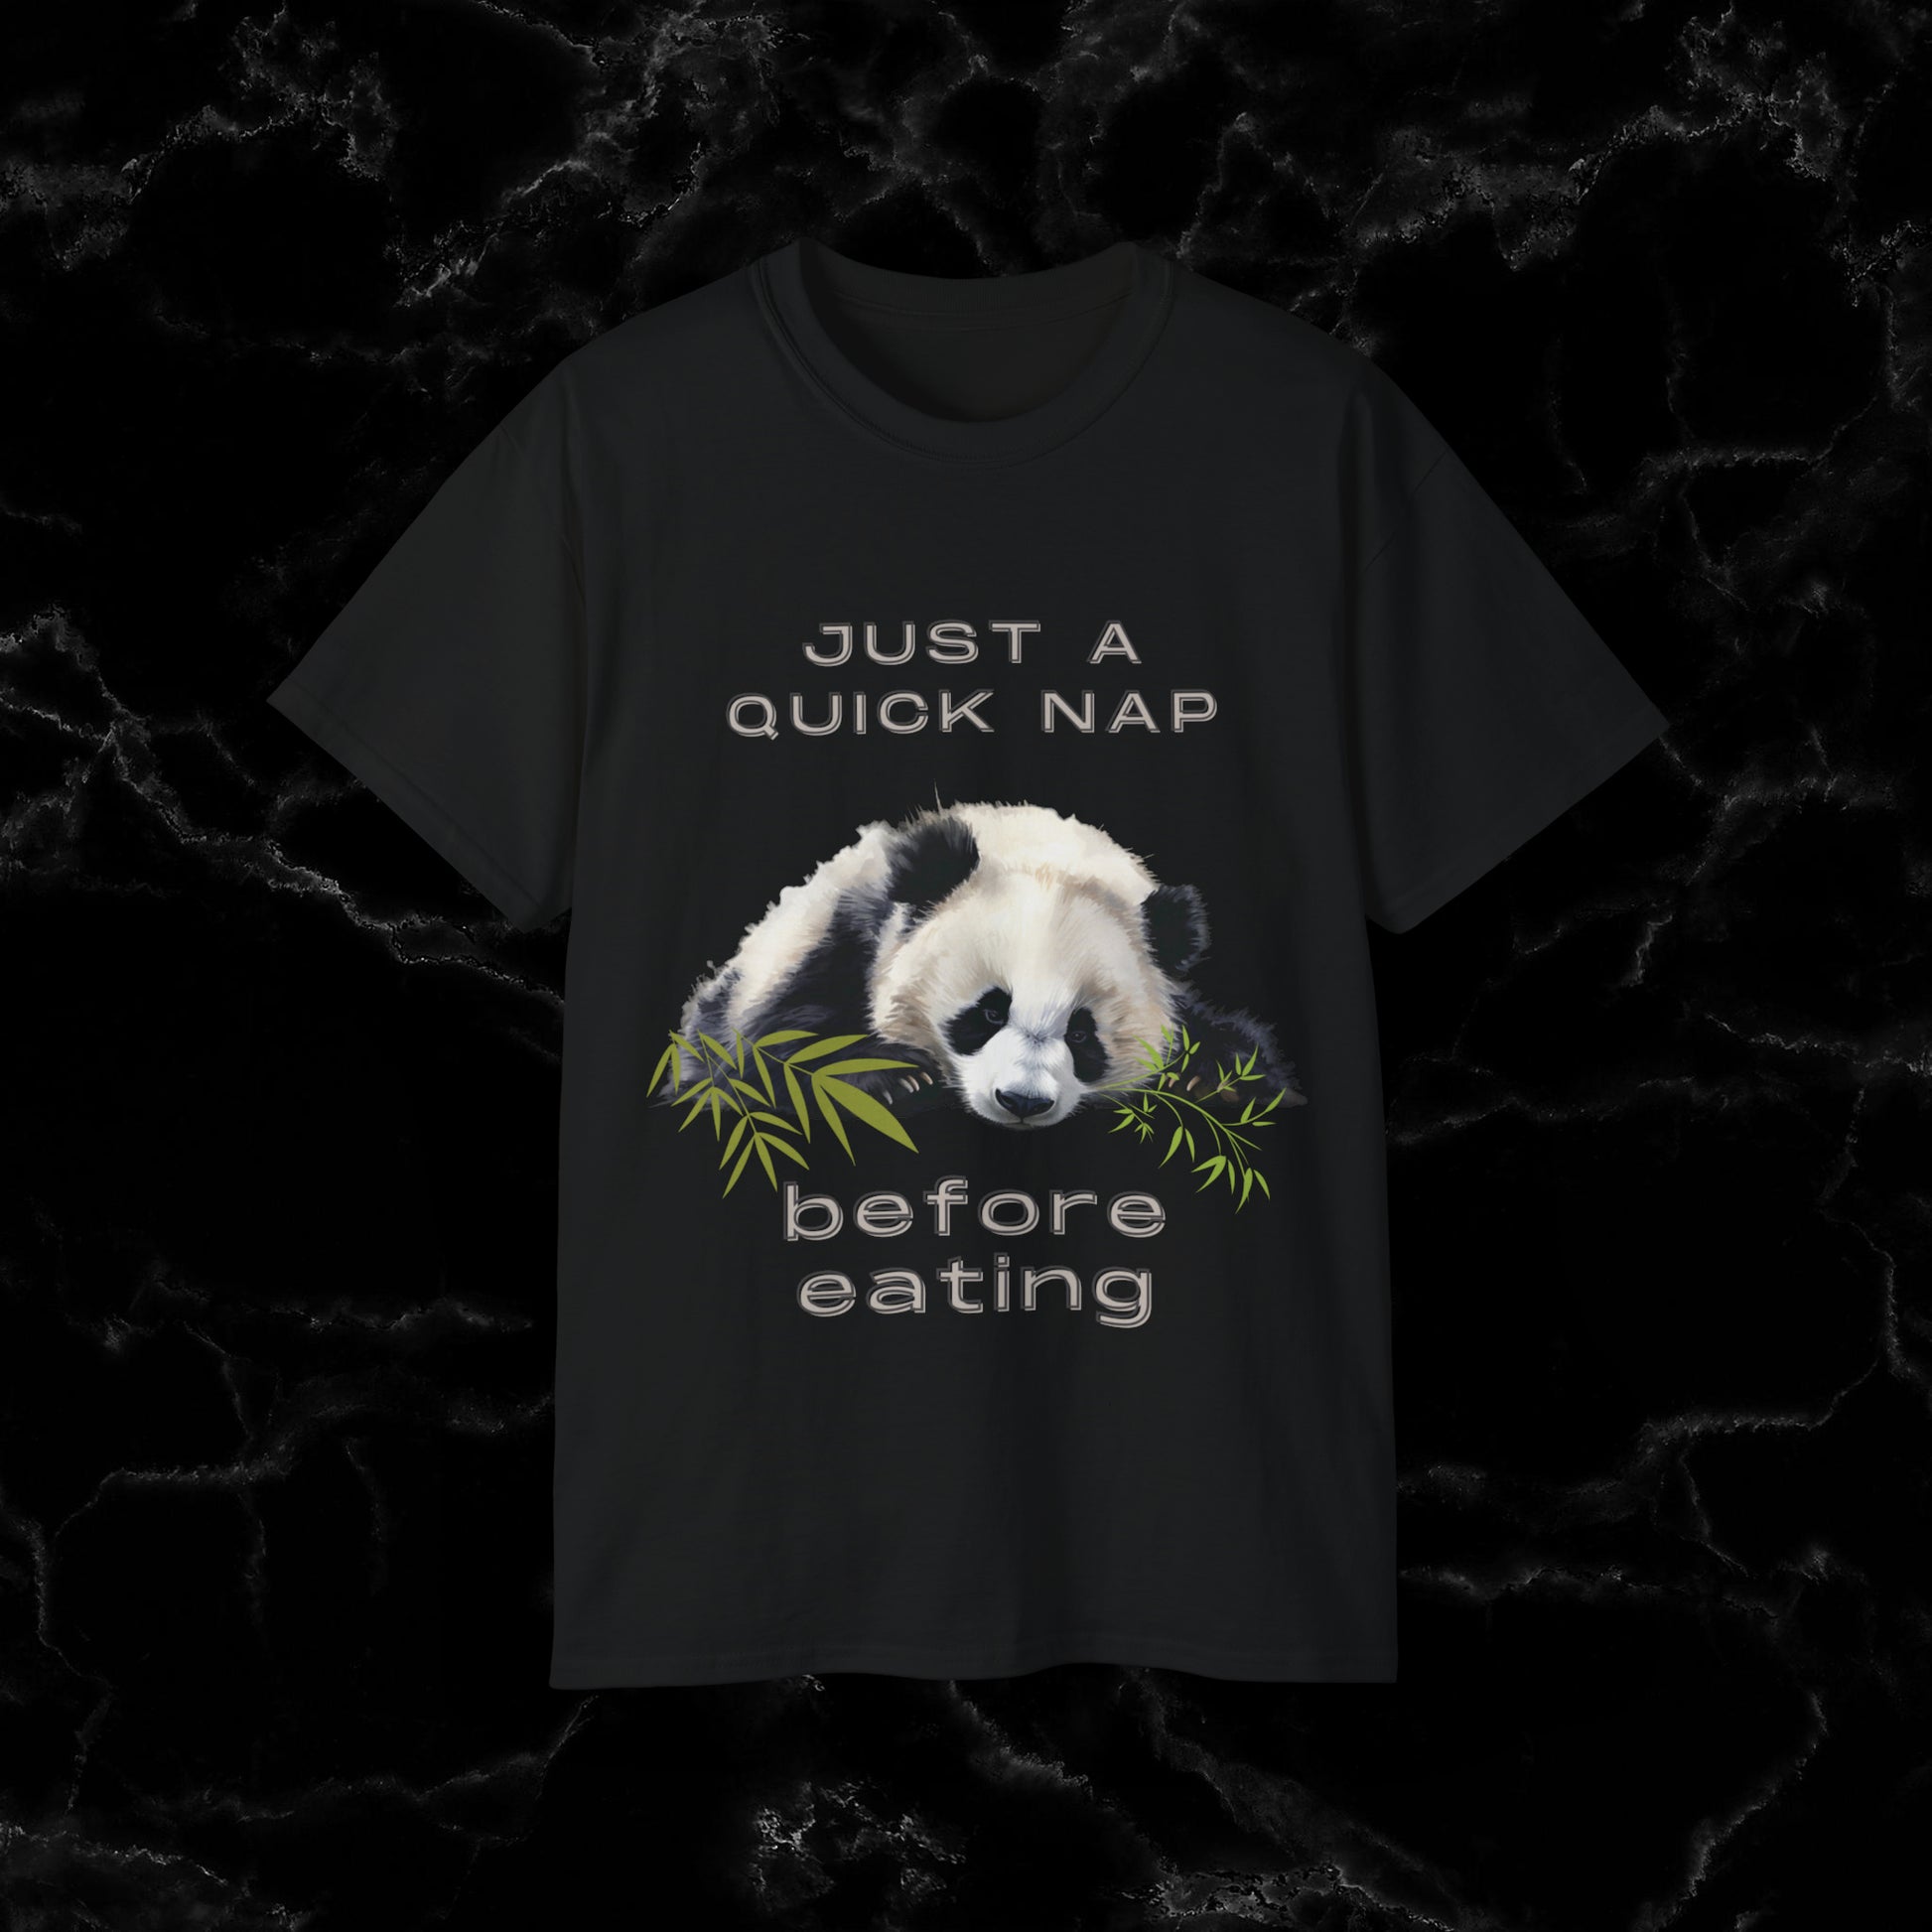 Nap Time Panda Unisex Funny Tee - Hilarious Panda Nap Design - Just a Quick Nap Before Eating T-Shirt Black S 